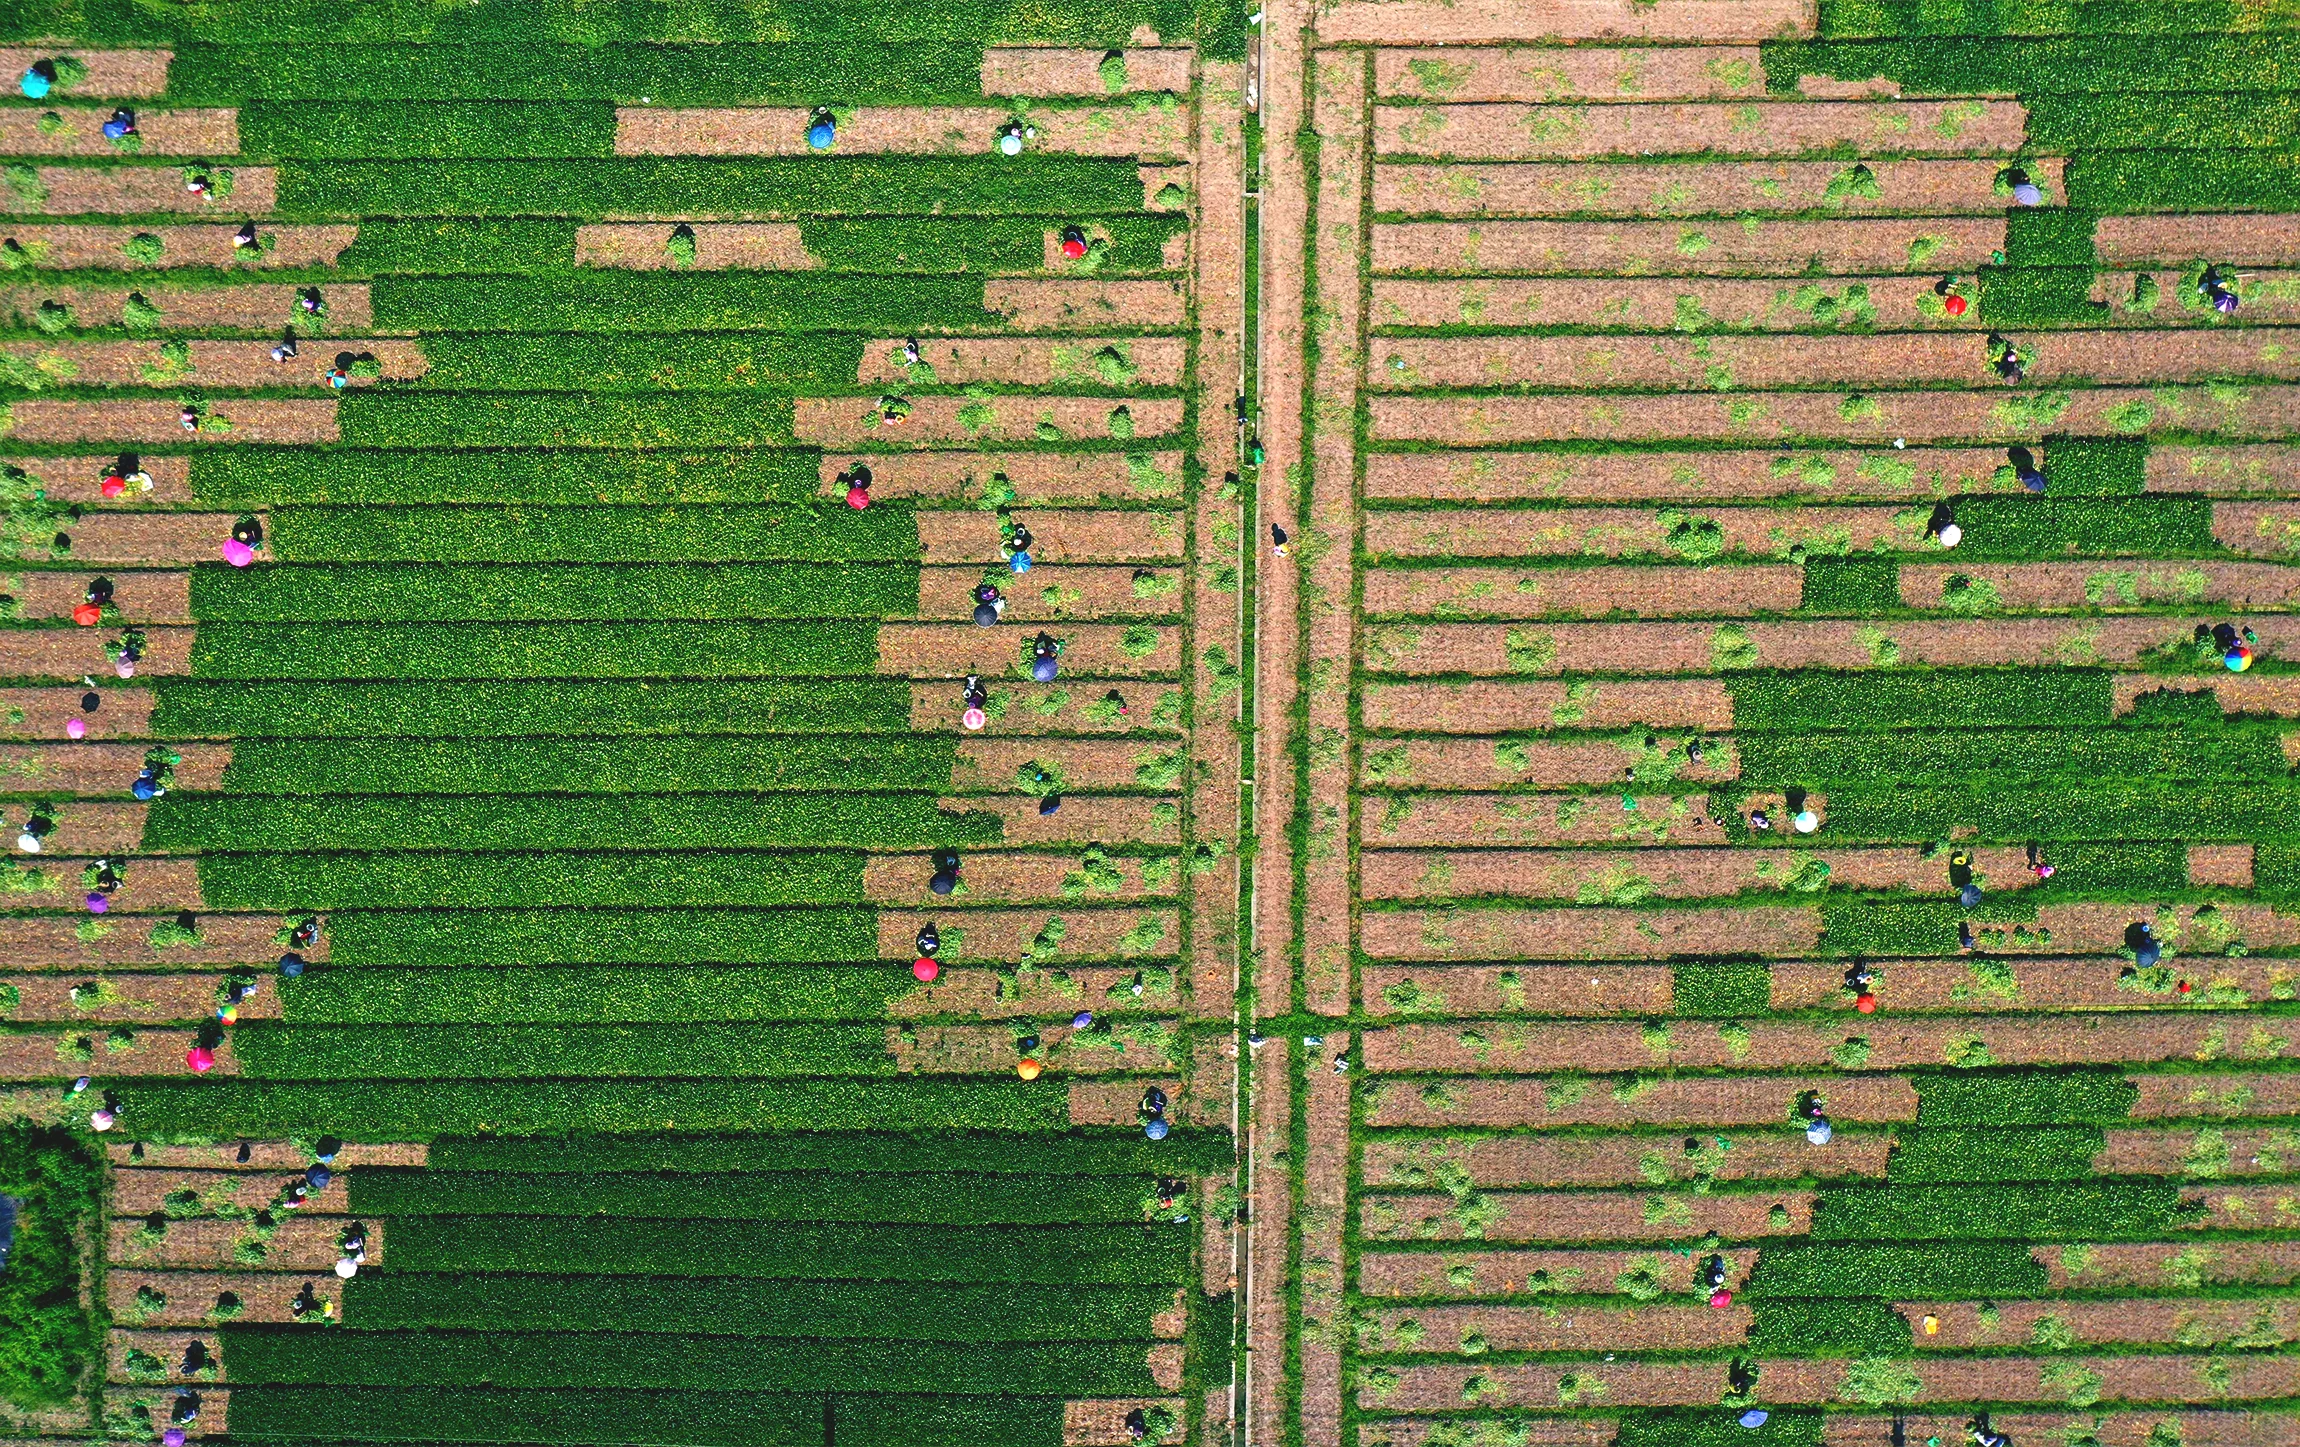 Farmers harvesting Edamame, or fresh green soybeans, in Wenling, Taizhou City, China. (Photo Liu Zhenqing/VCG via Getty Images)